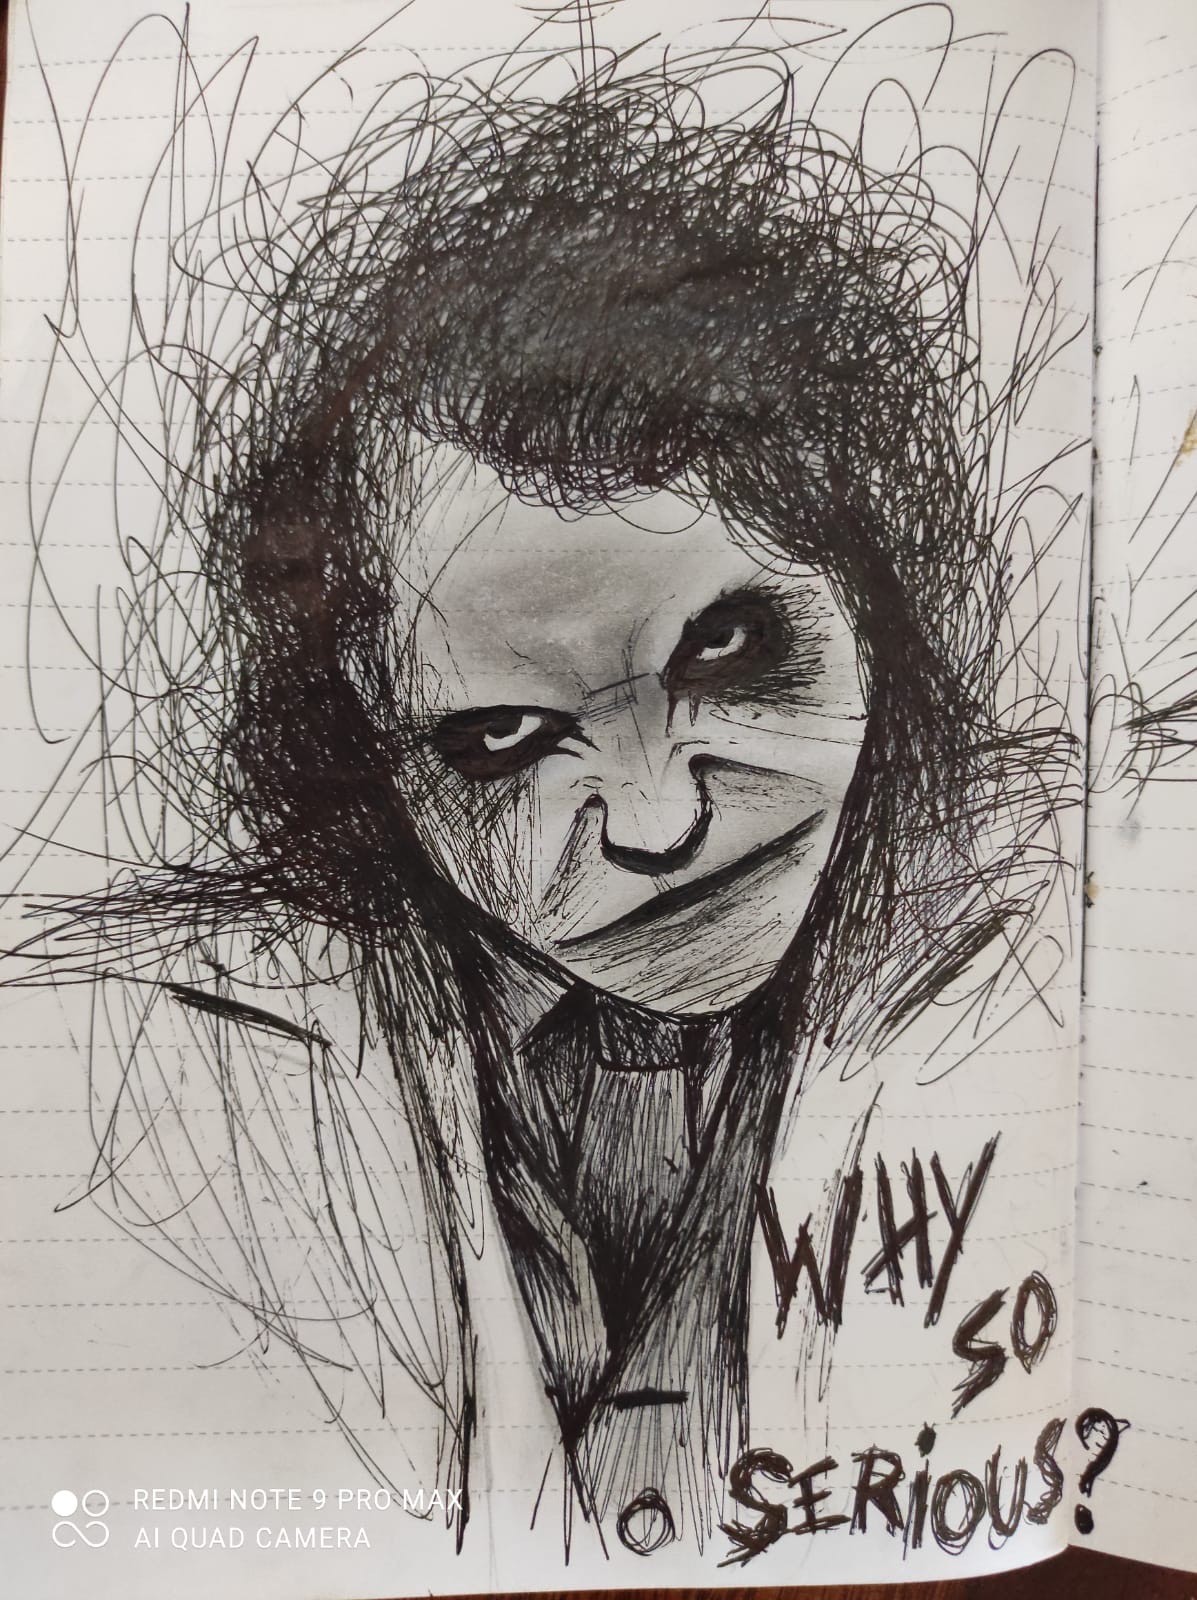 Joker to owl - Sketch drawings to remember